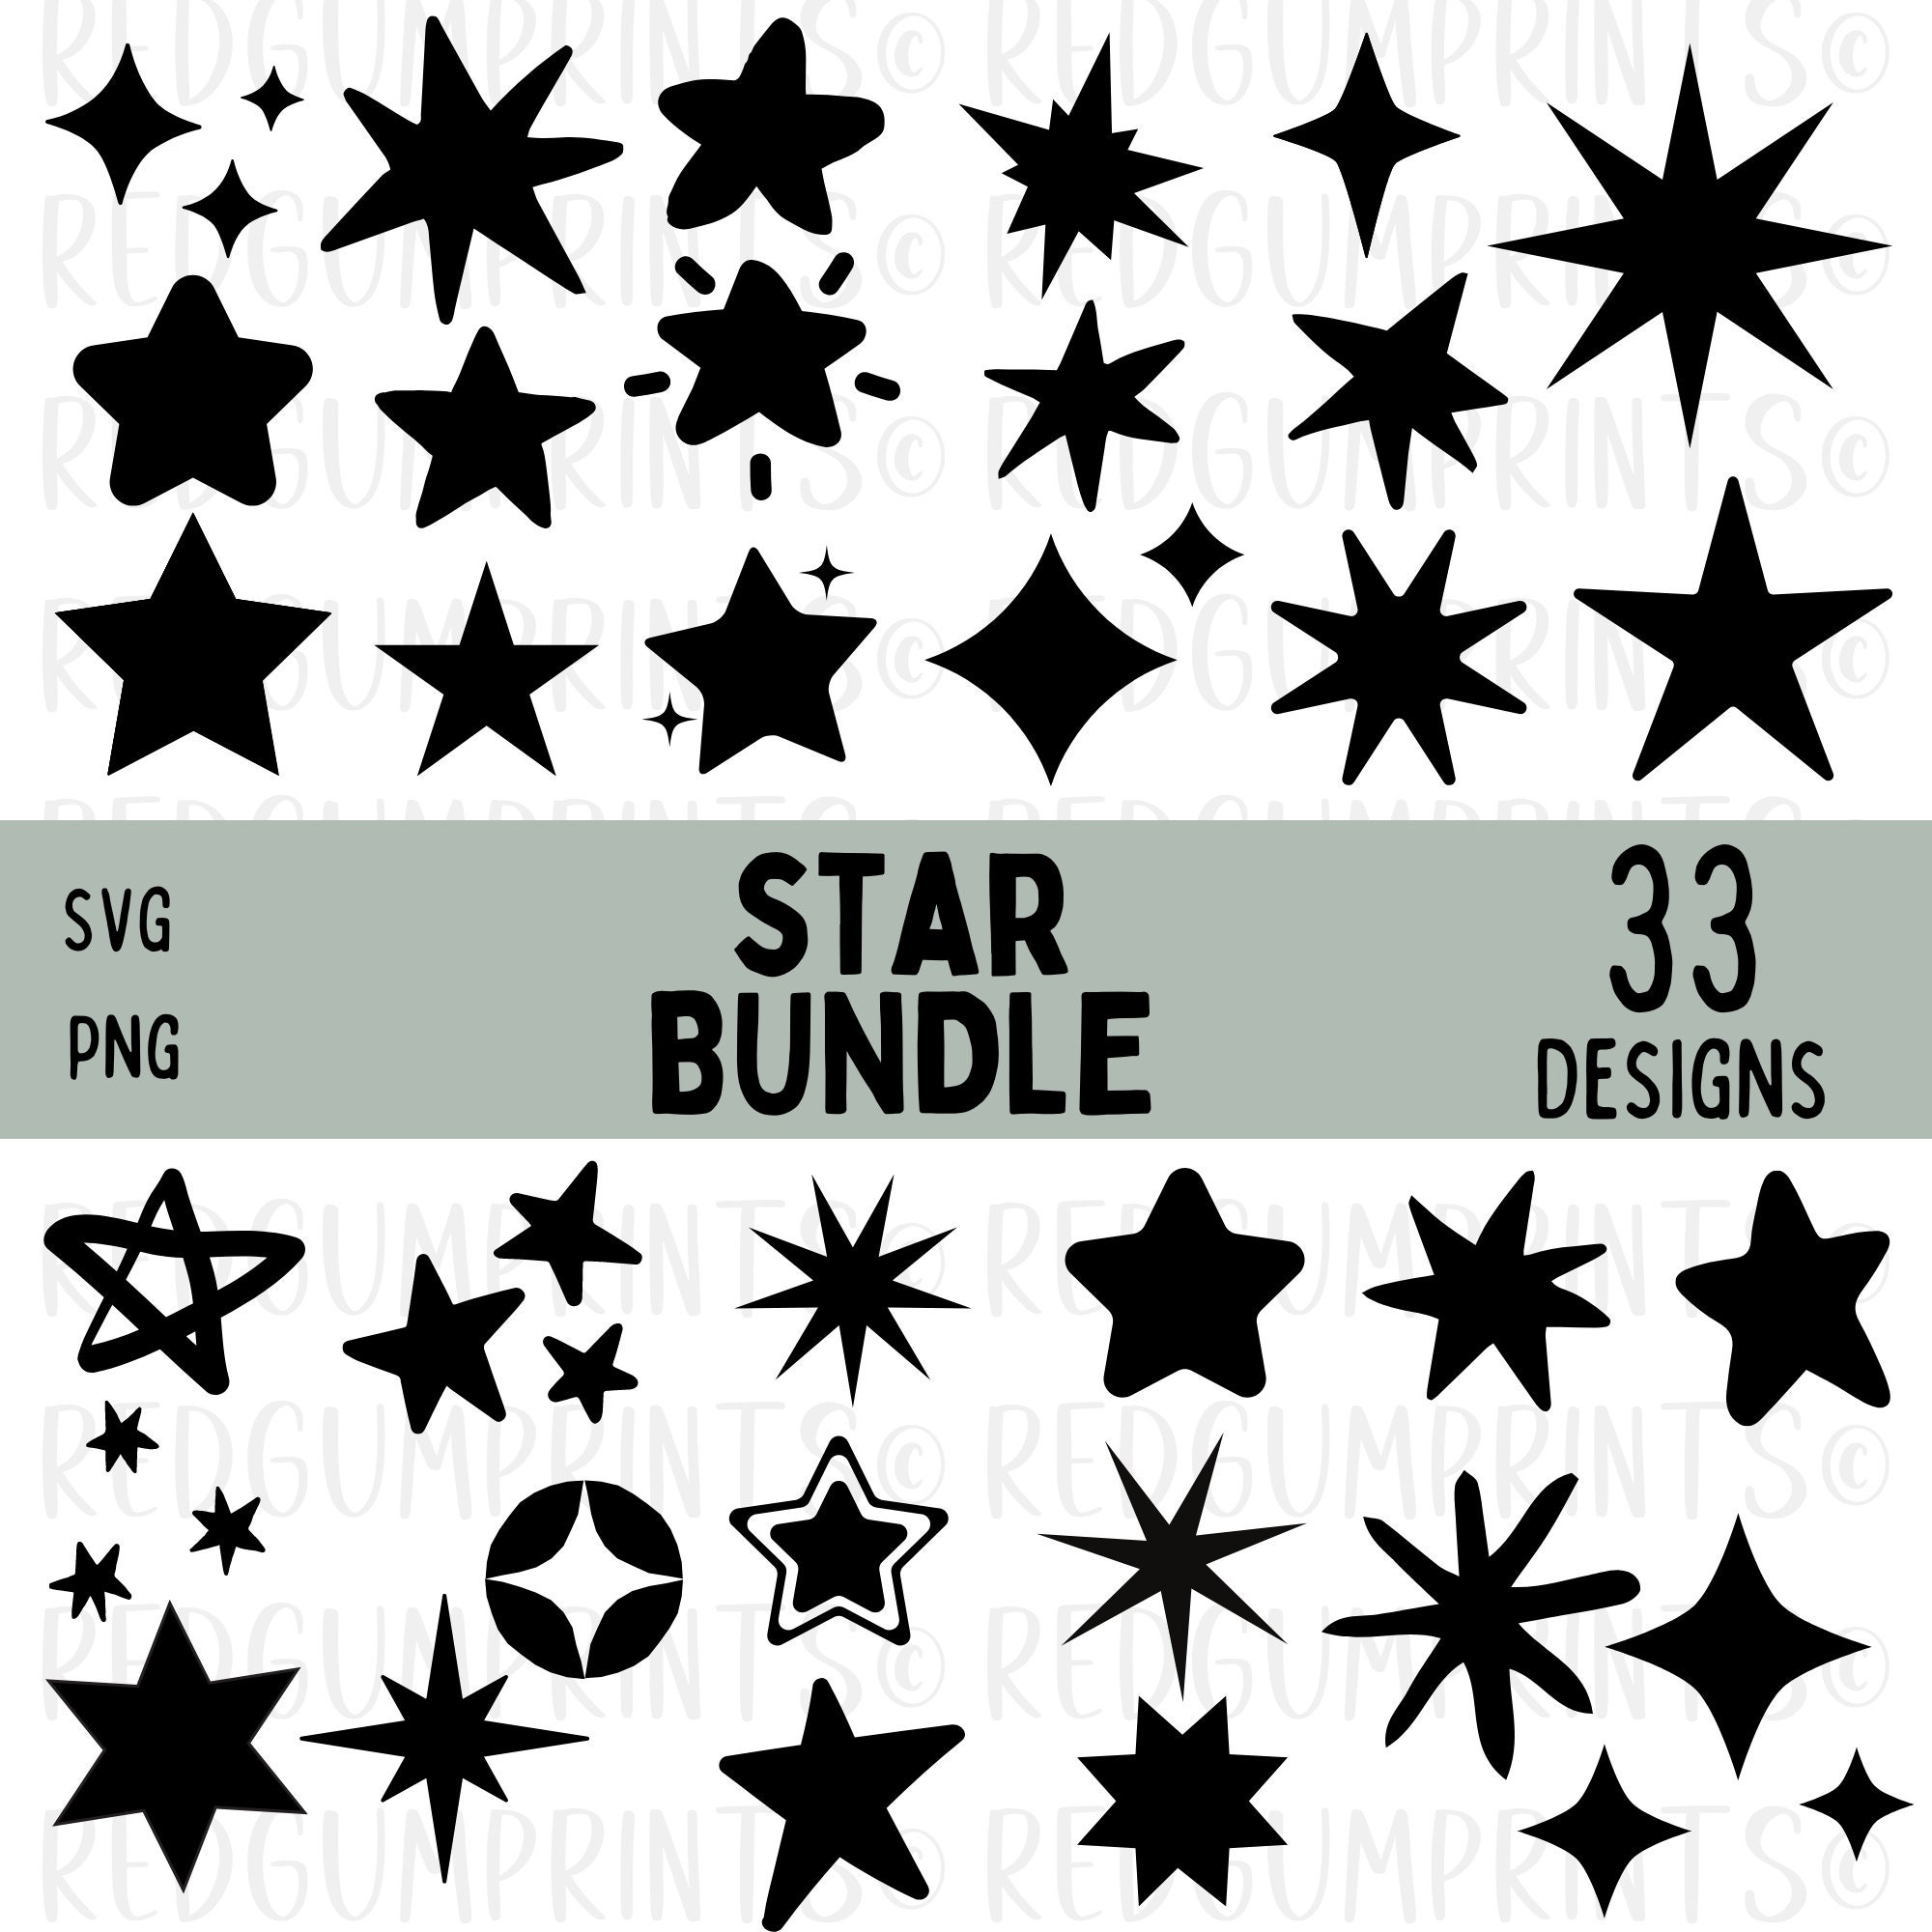 21 Silver Glitter Stars Clipart Set, Silver Glitter Star Frames